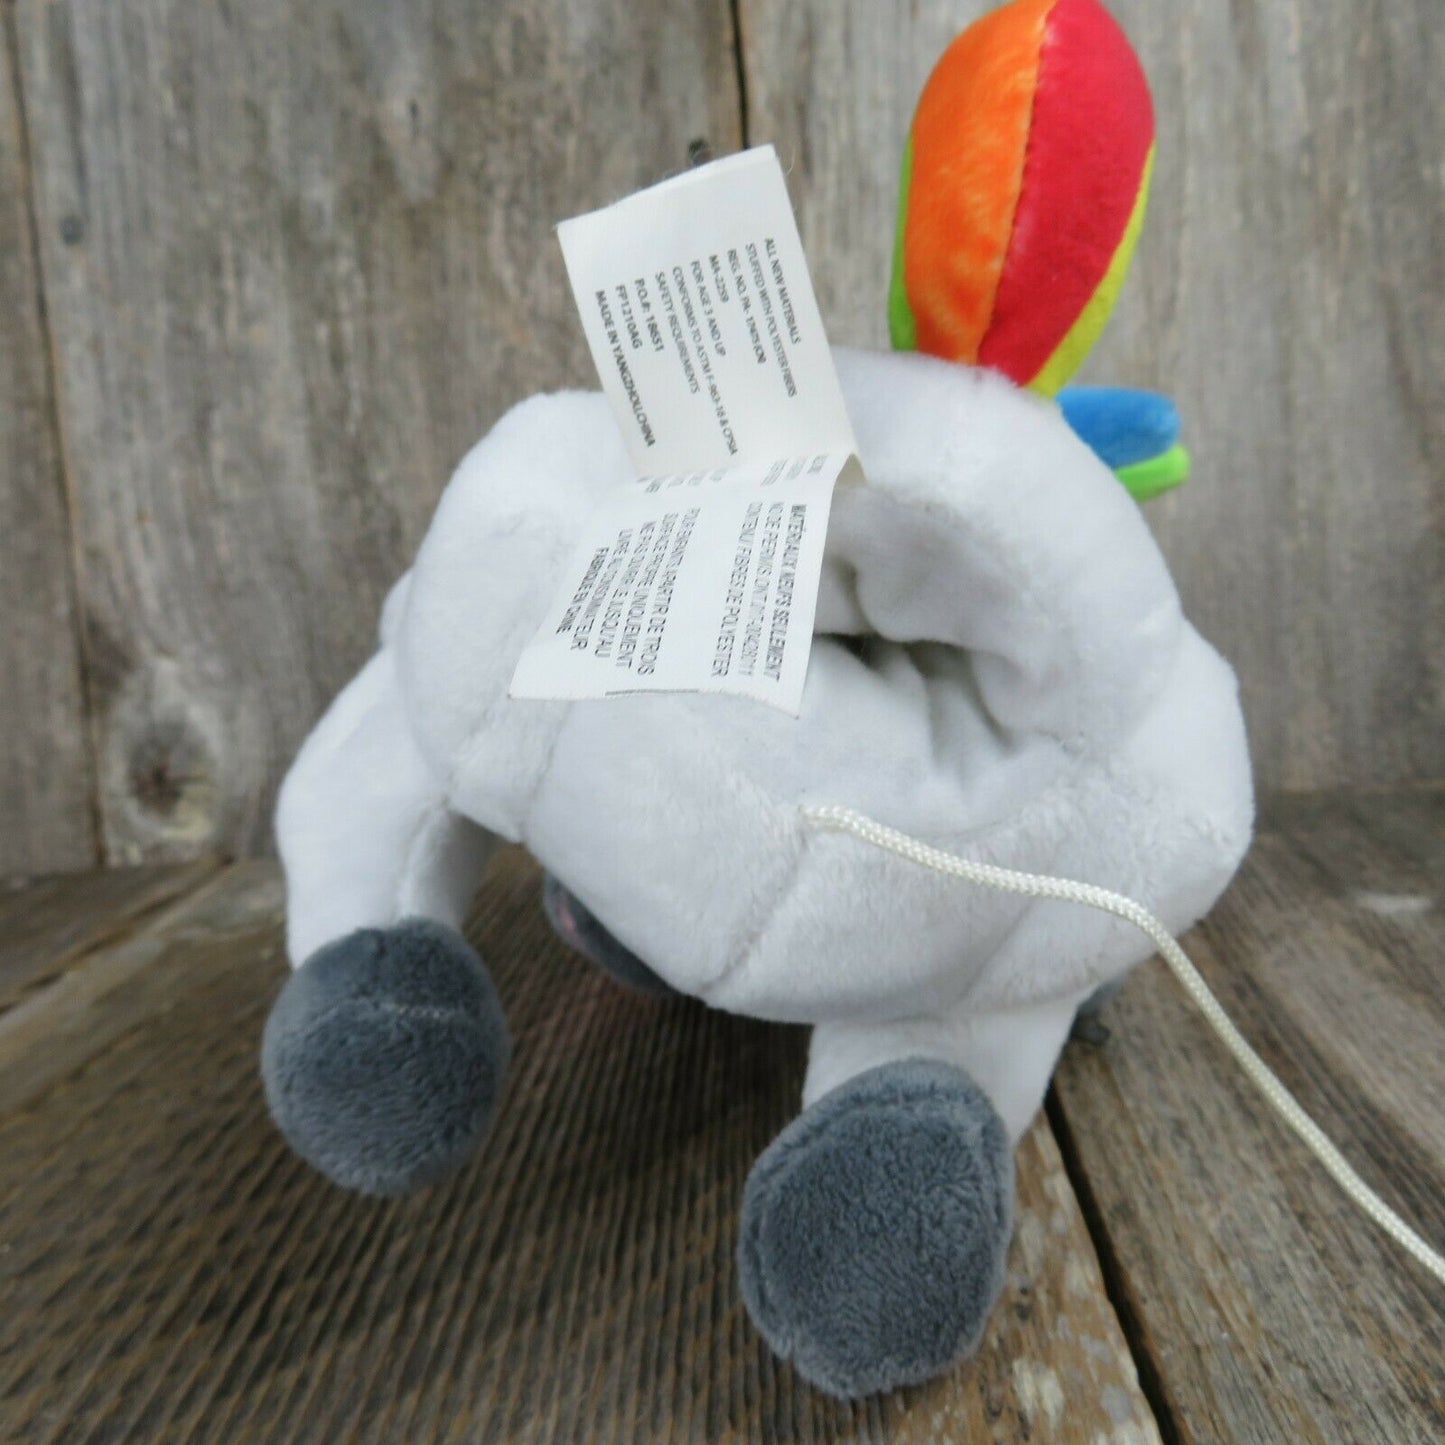 Squatty Potty Dookie Unicorn Plush Pooping Training Rainbow Poop Stuffed Animal